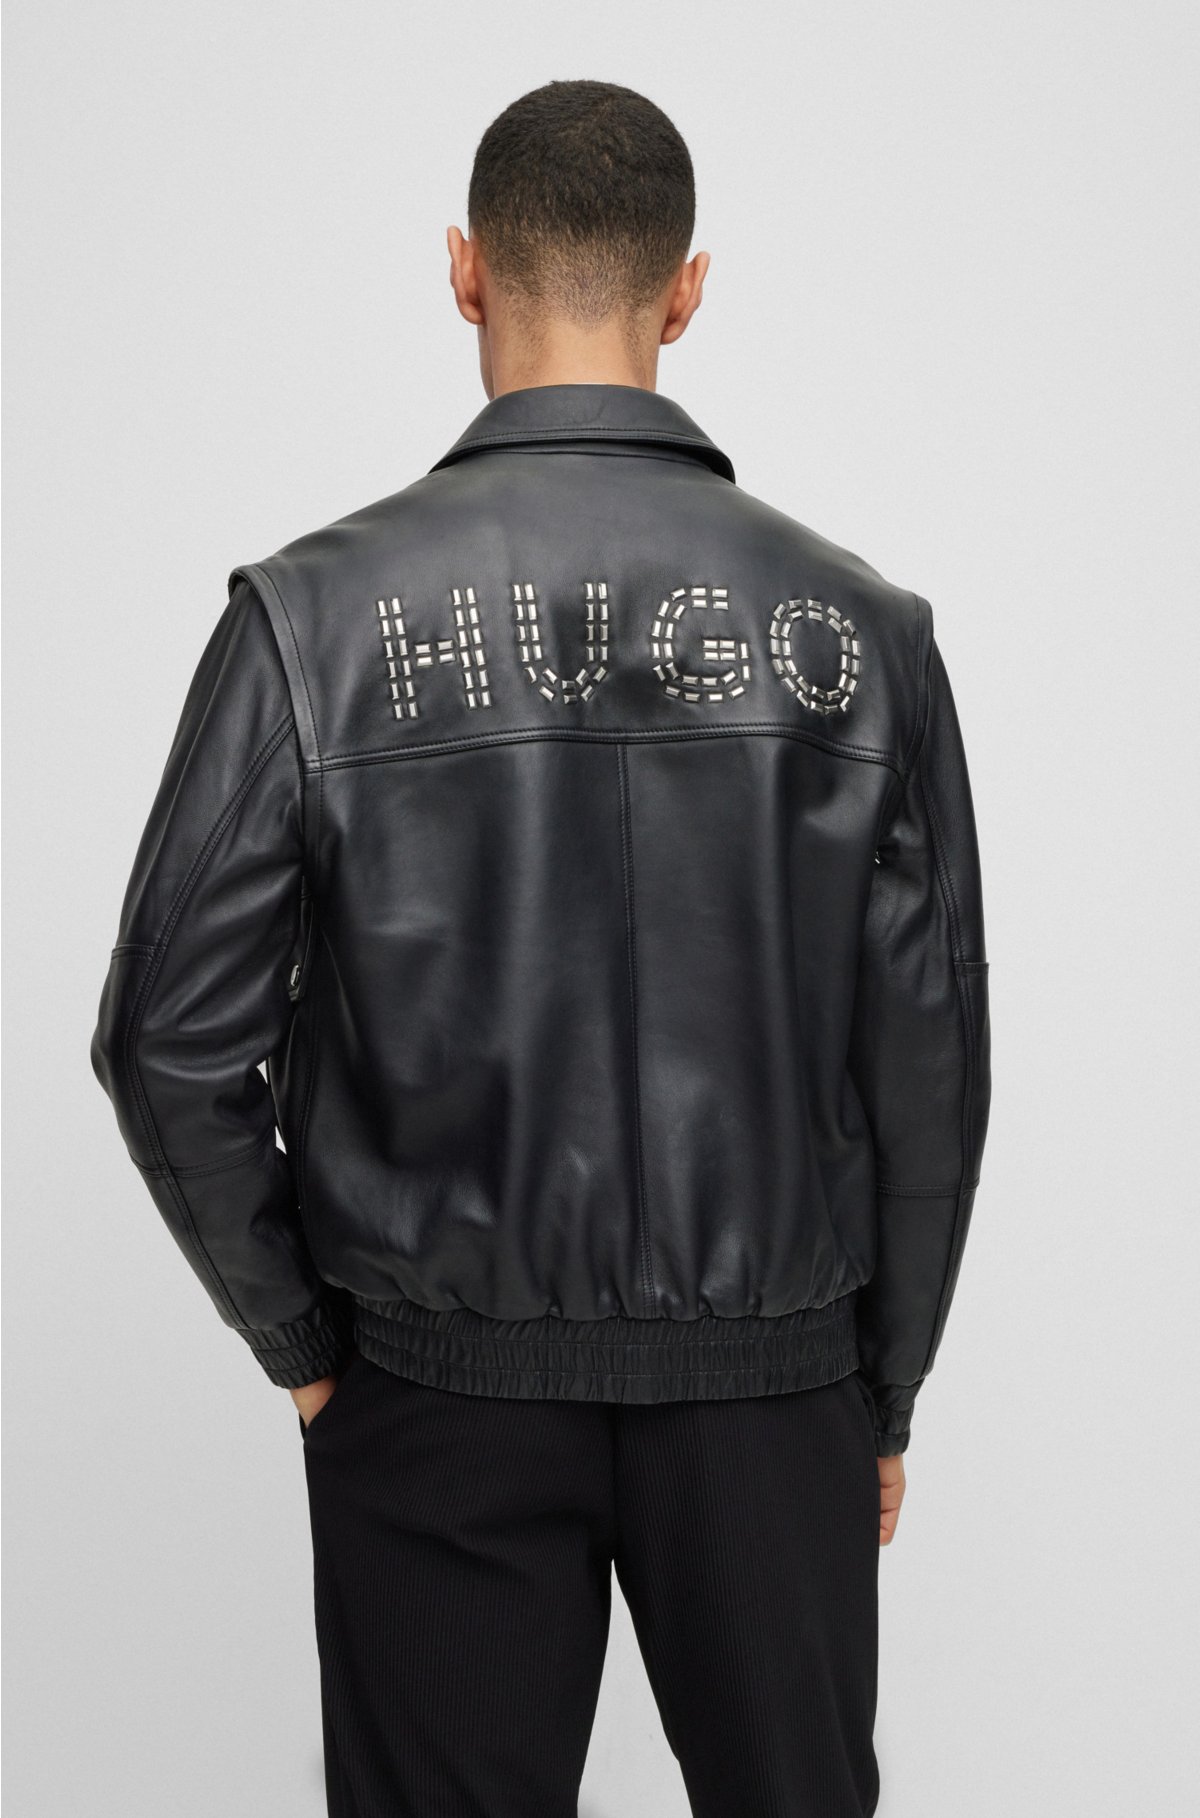 HUGO - Logo-studded leather jacket with detachable sleeves